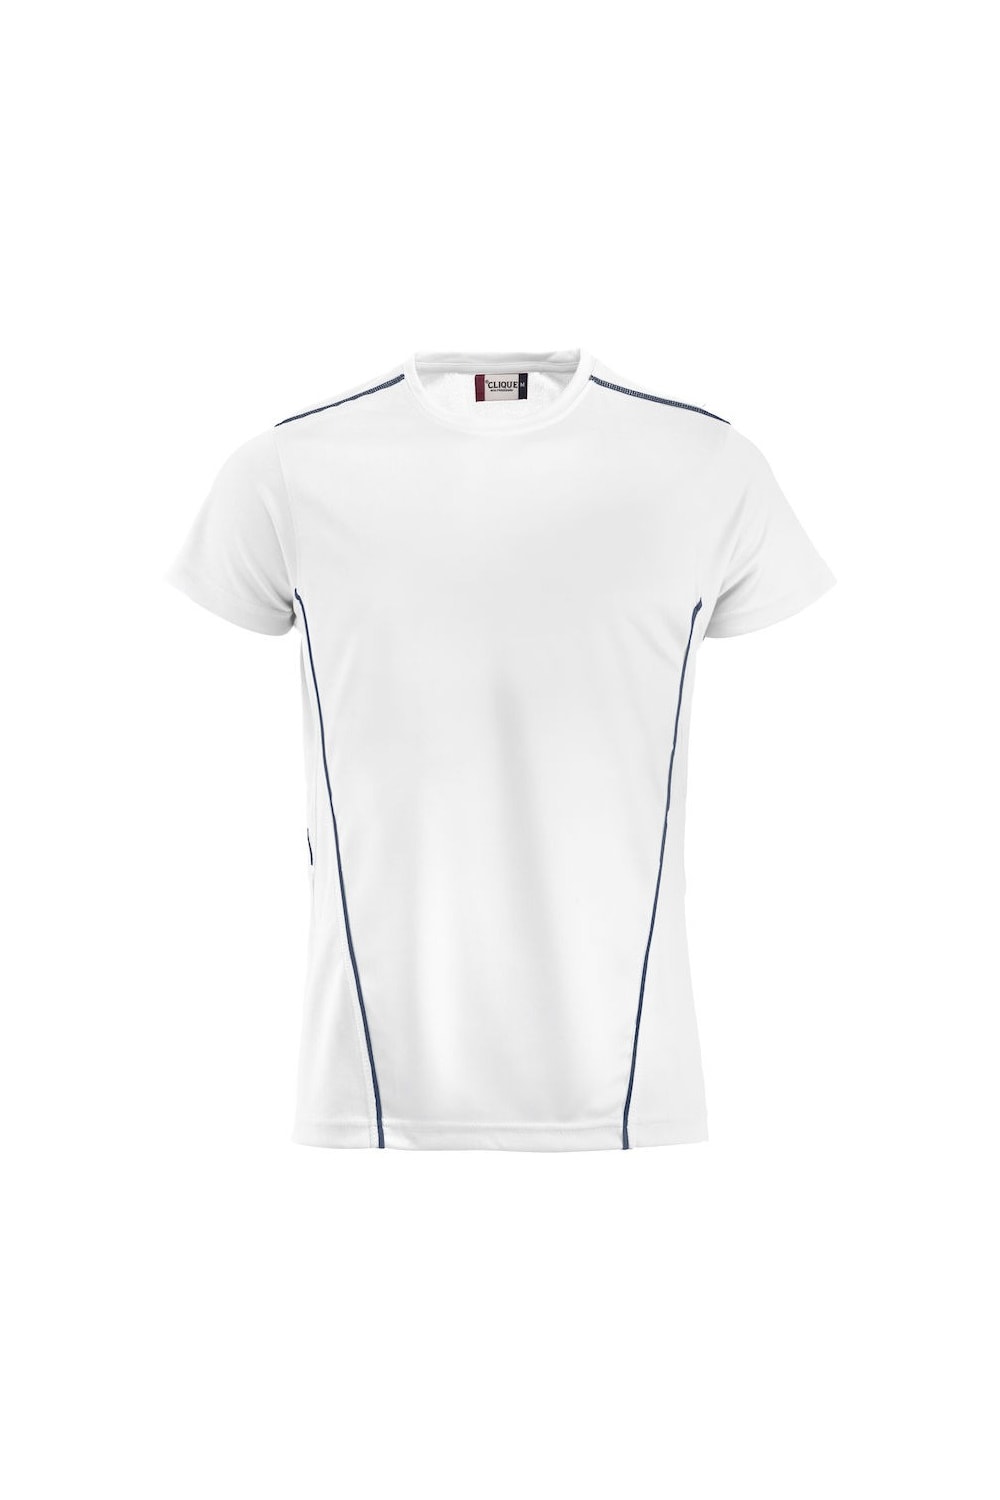 Unisex Adult Ice Sport T-Shirt - White/Navy